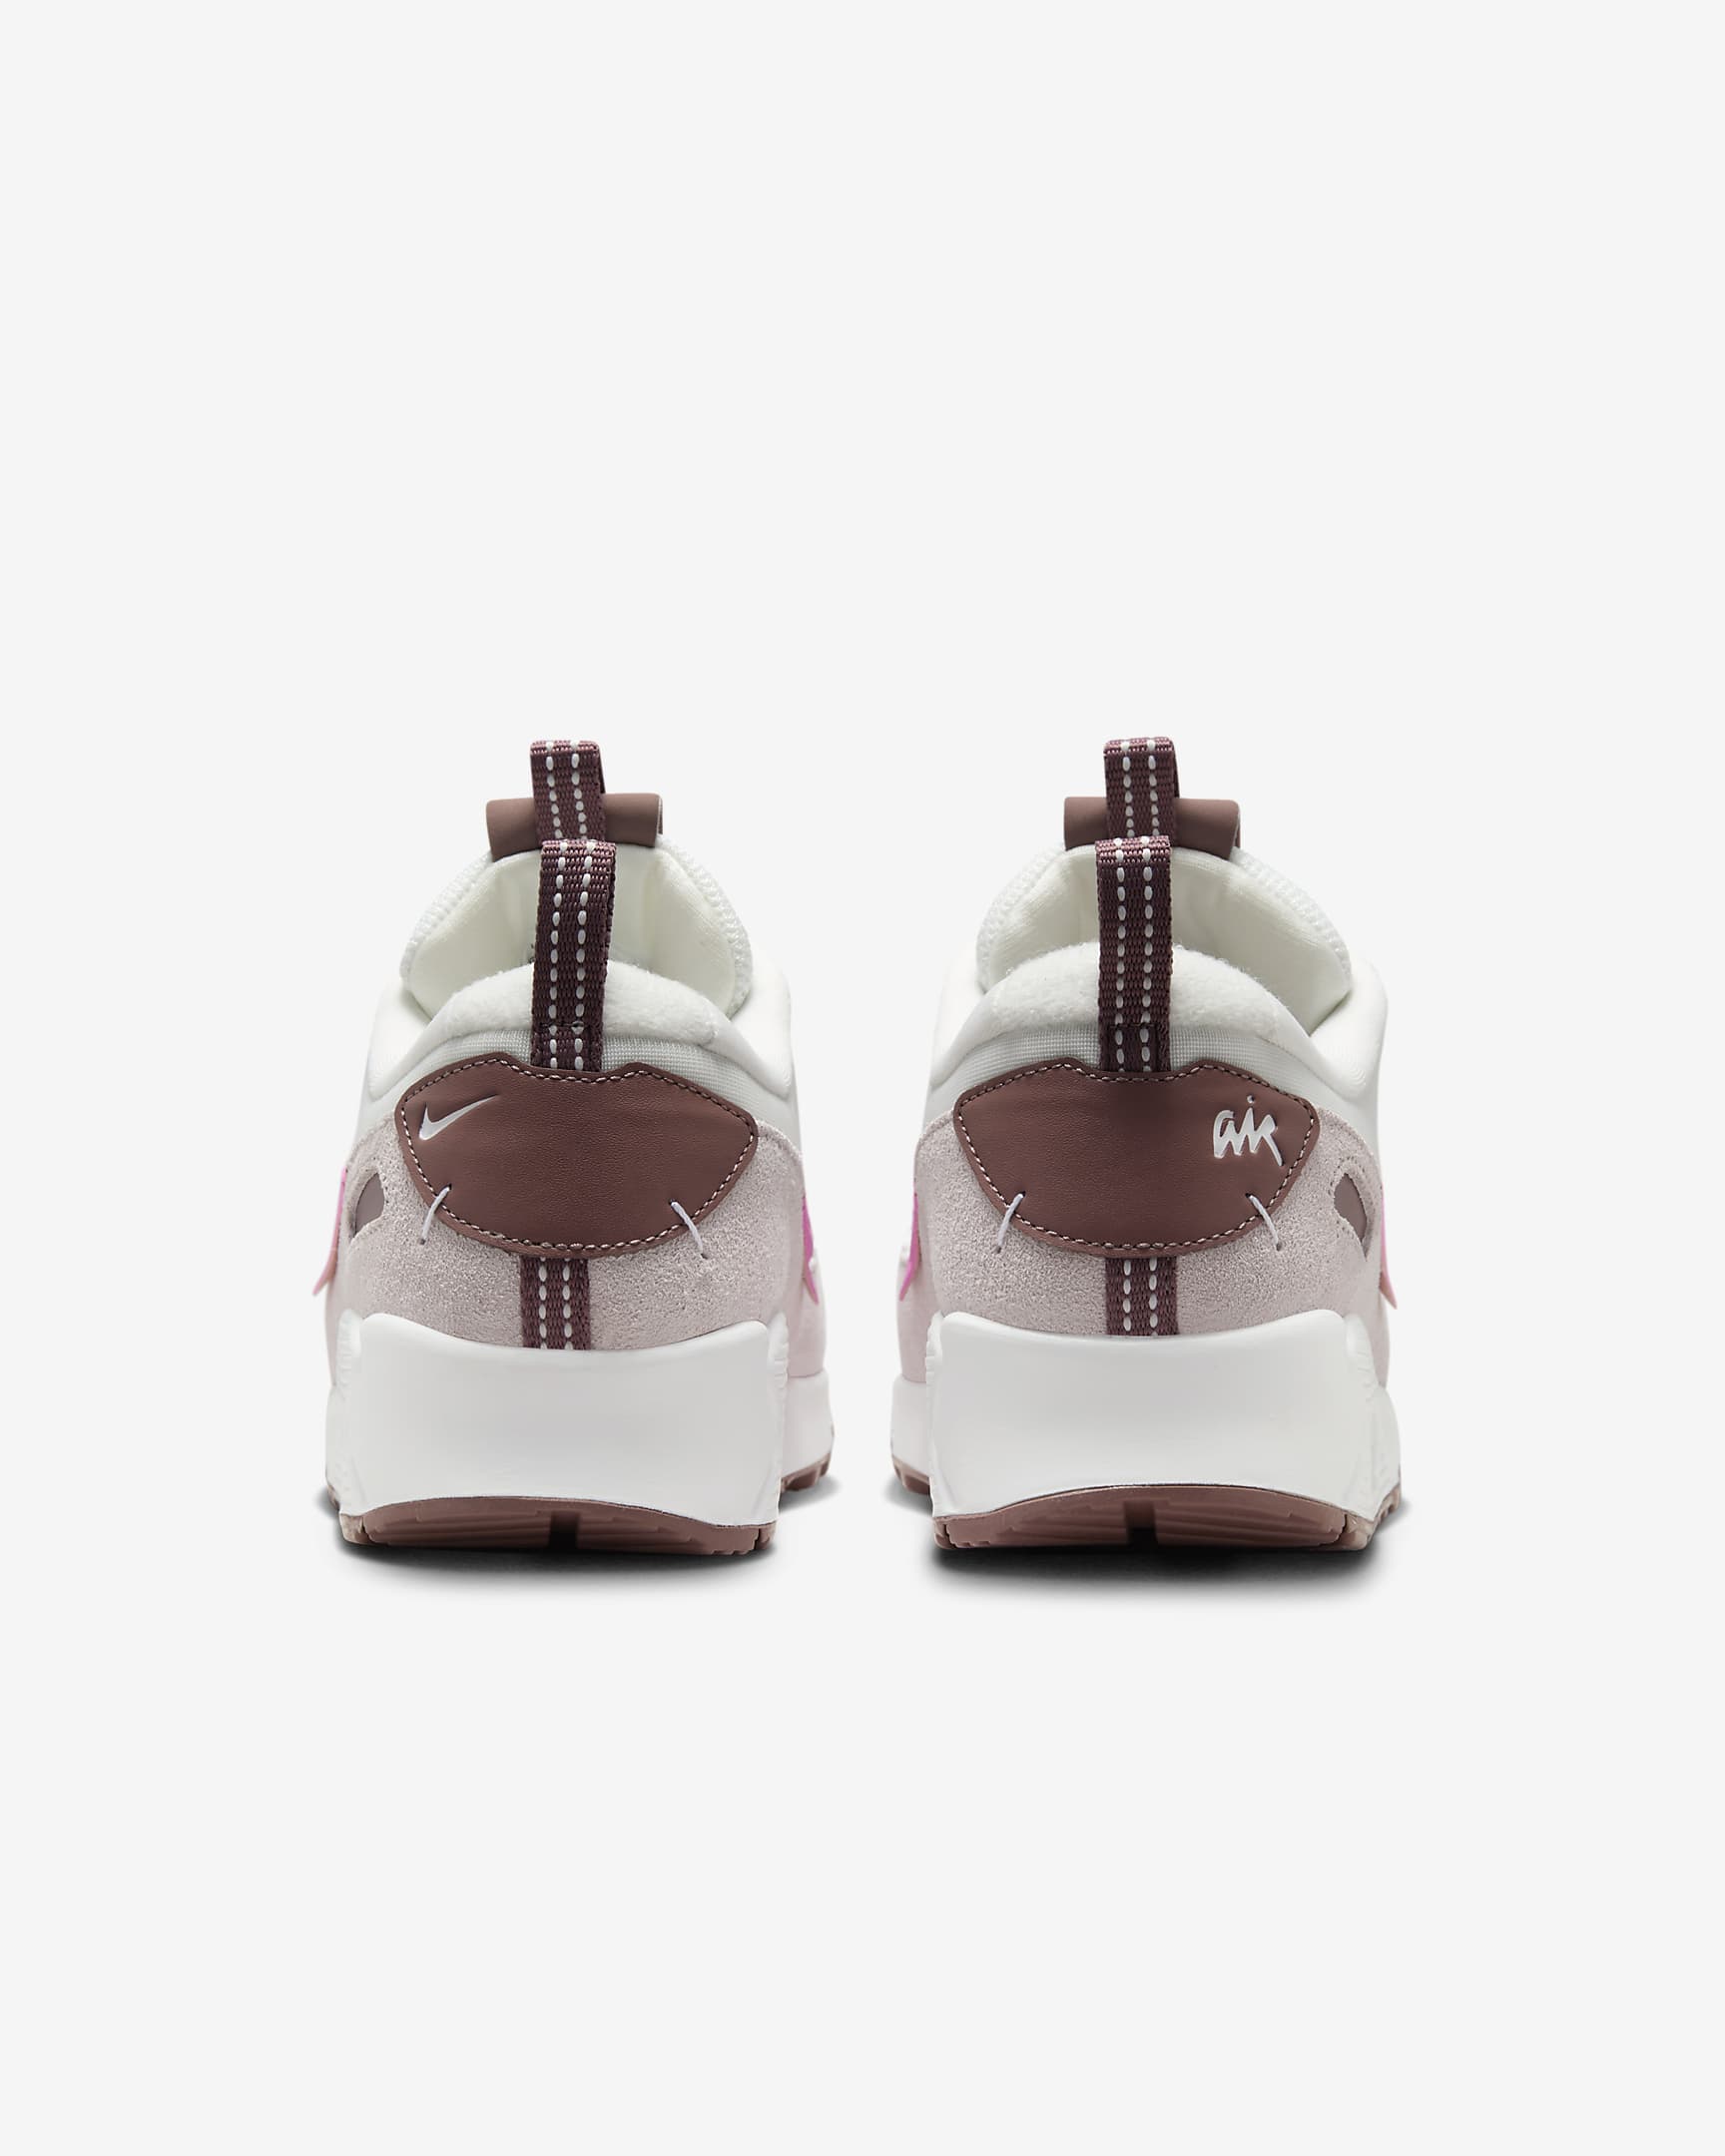 Nike Air Max 90 Futura Women's Shoes - Platinum Violet/Smokey Mauve/Pink Foam/Playful Pink